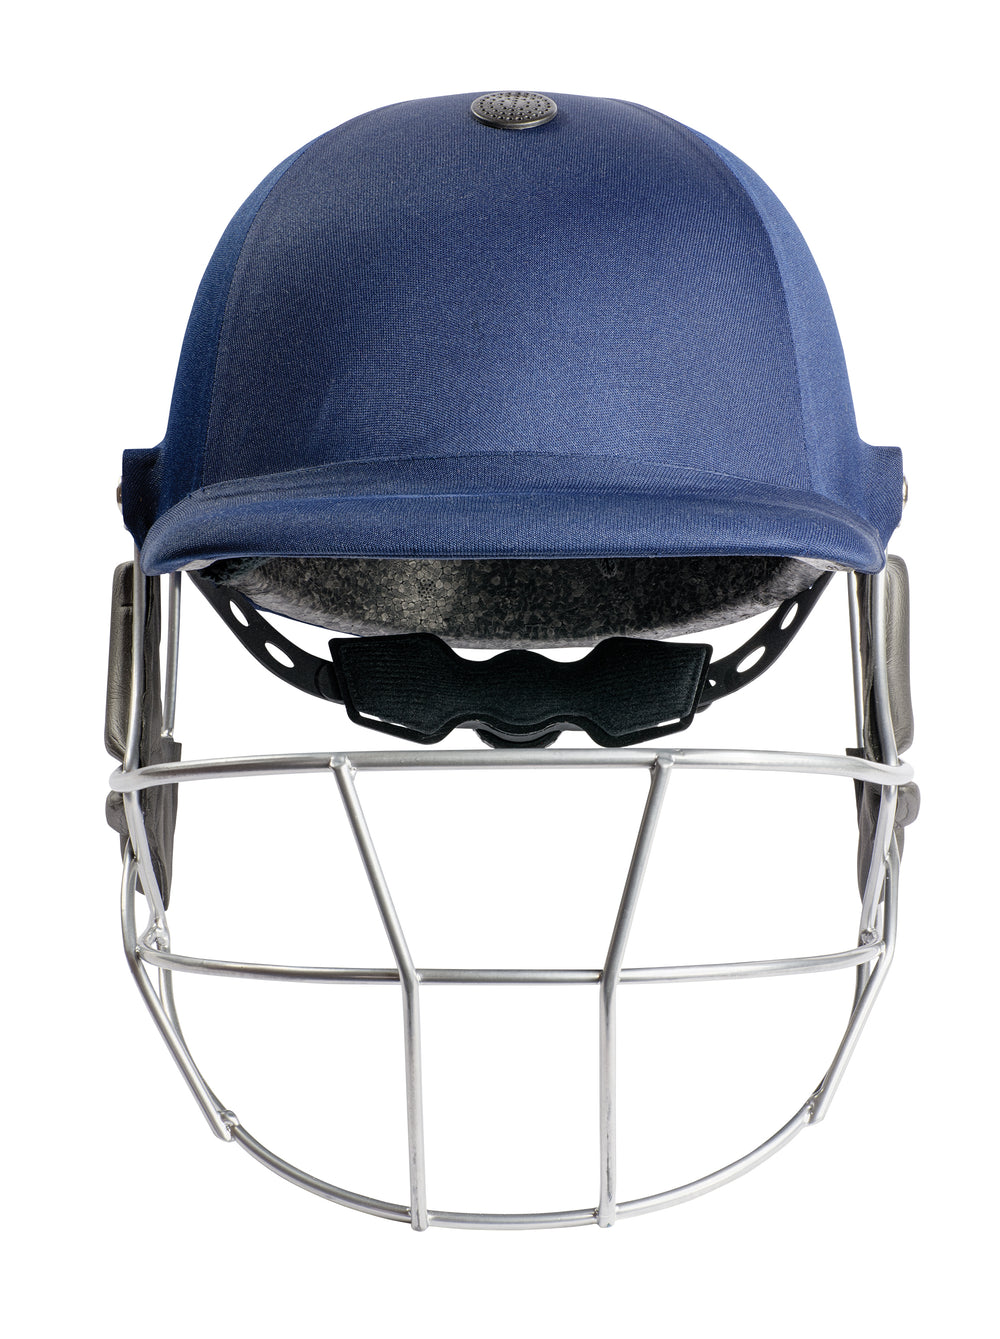 Hunts County Xero Cricket Helmet